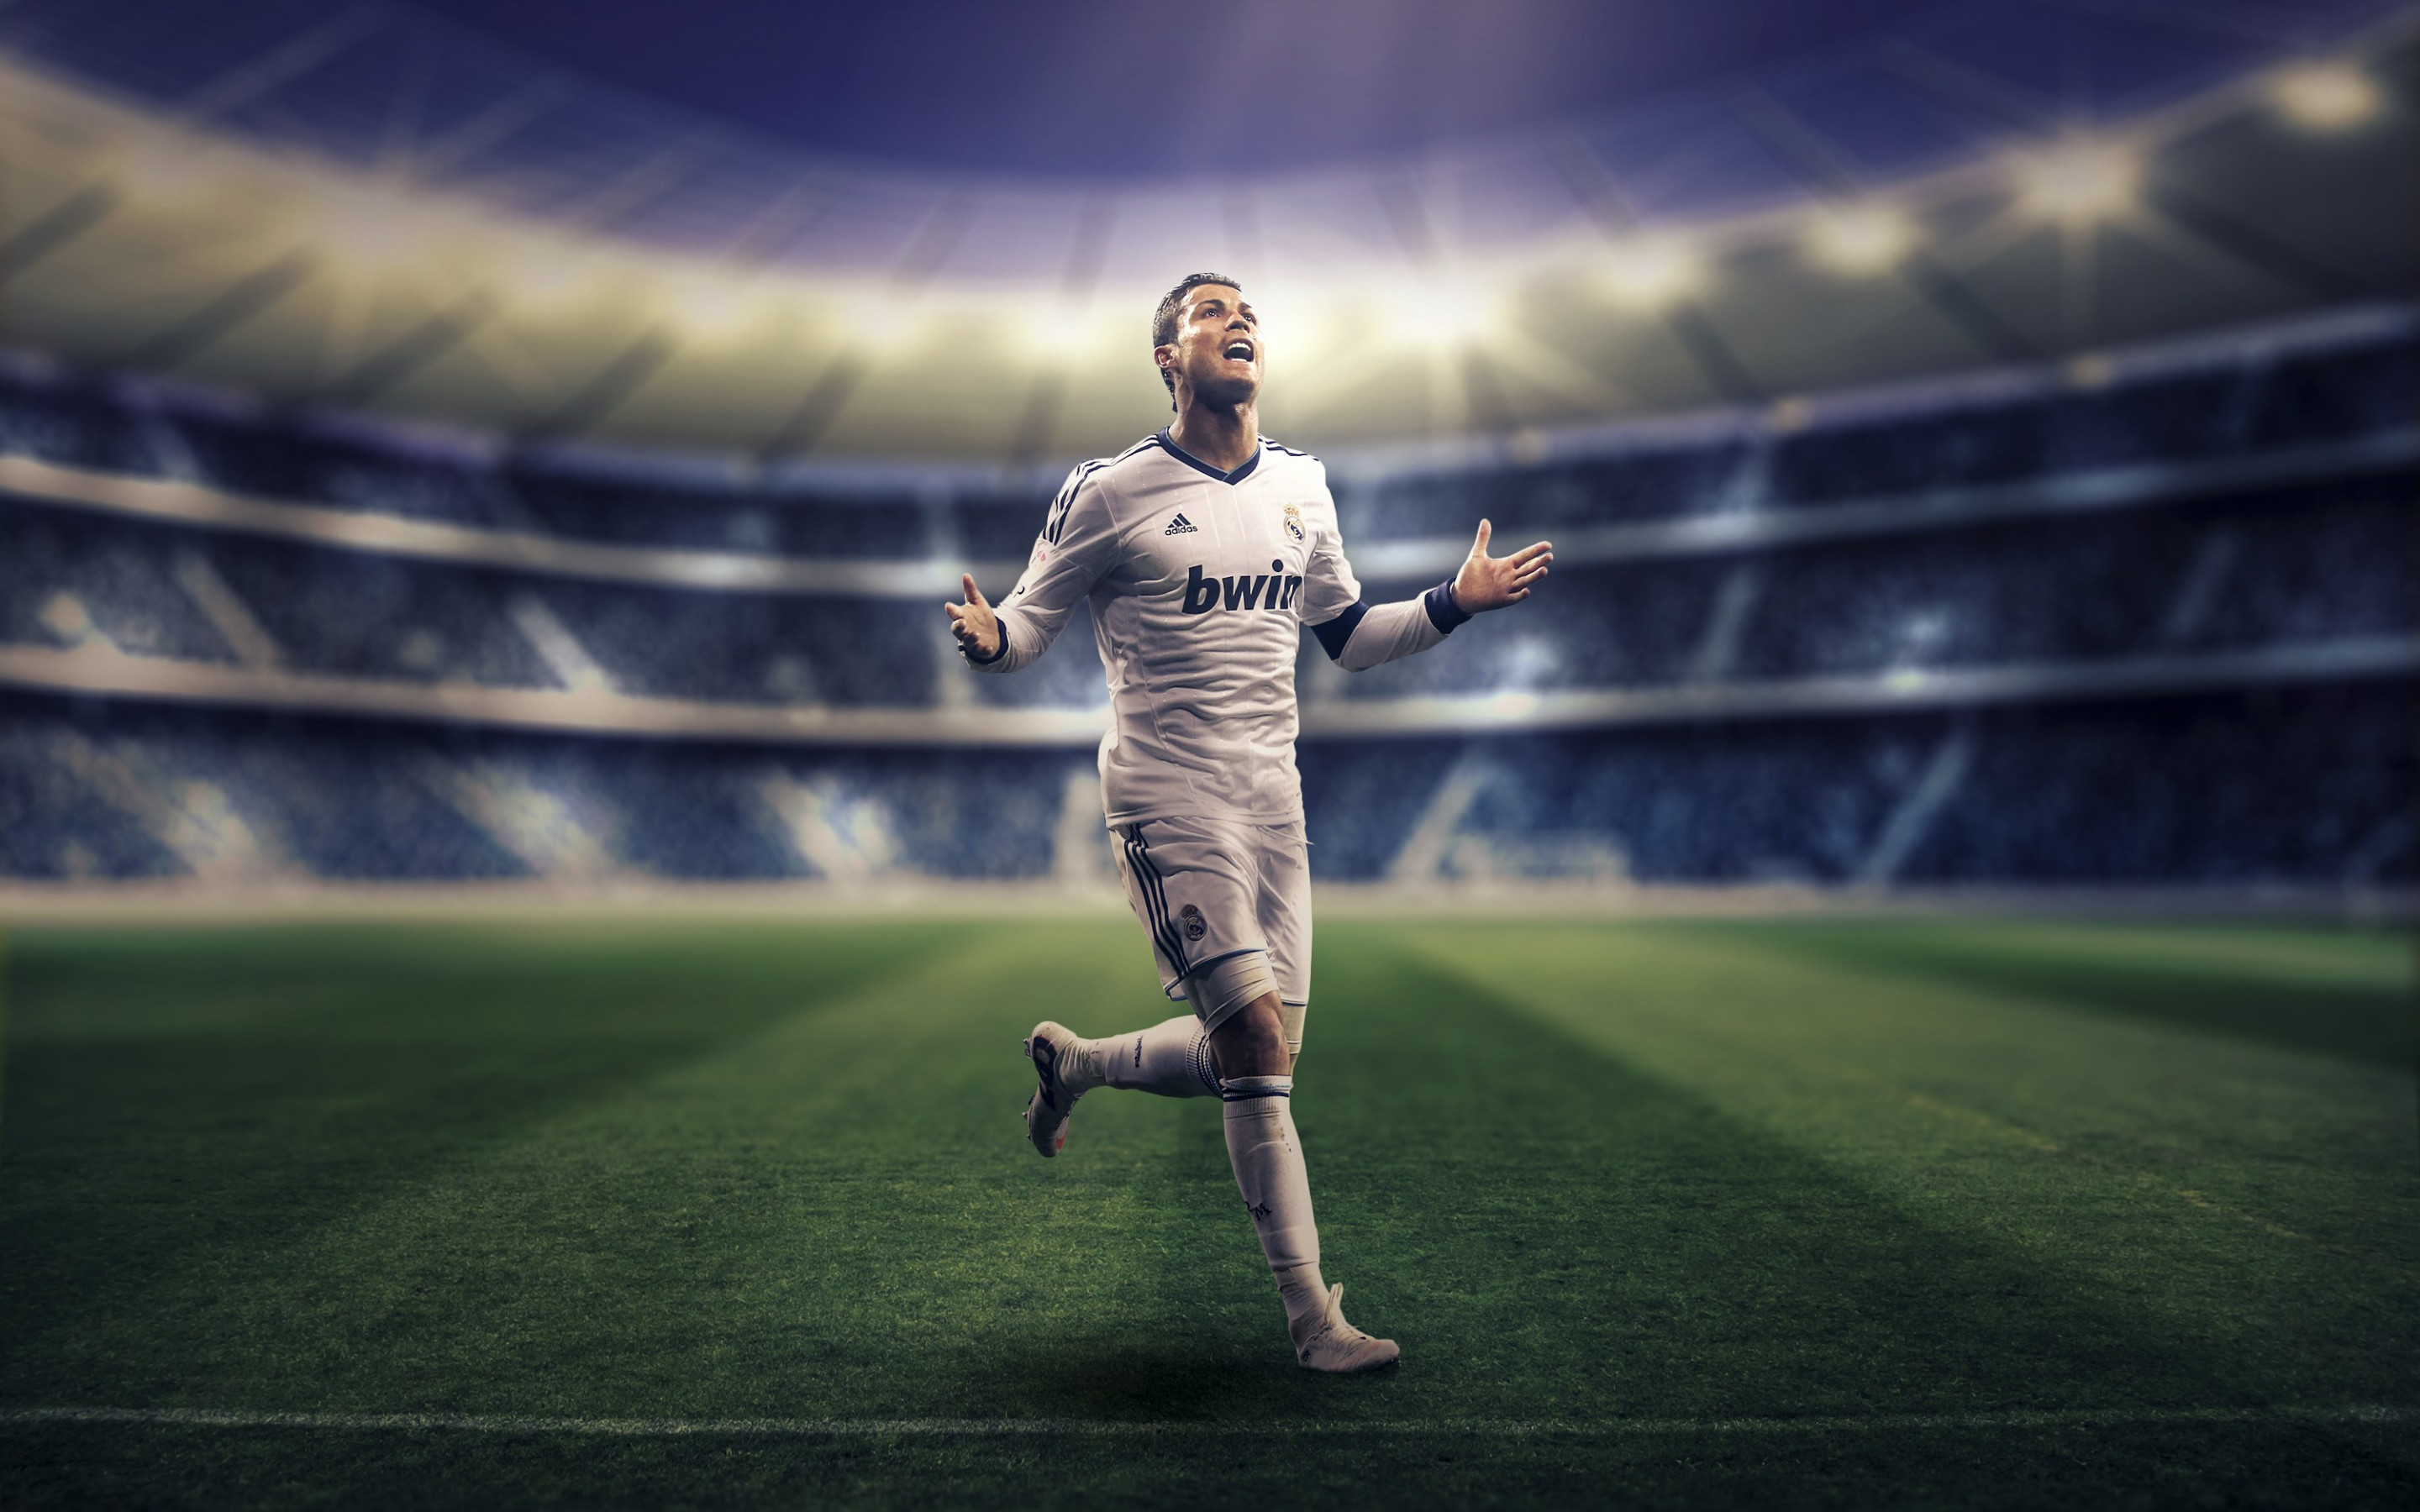 Download wallpaper: Cristiano Ronaldo for Real Madrid 2880x1800